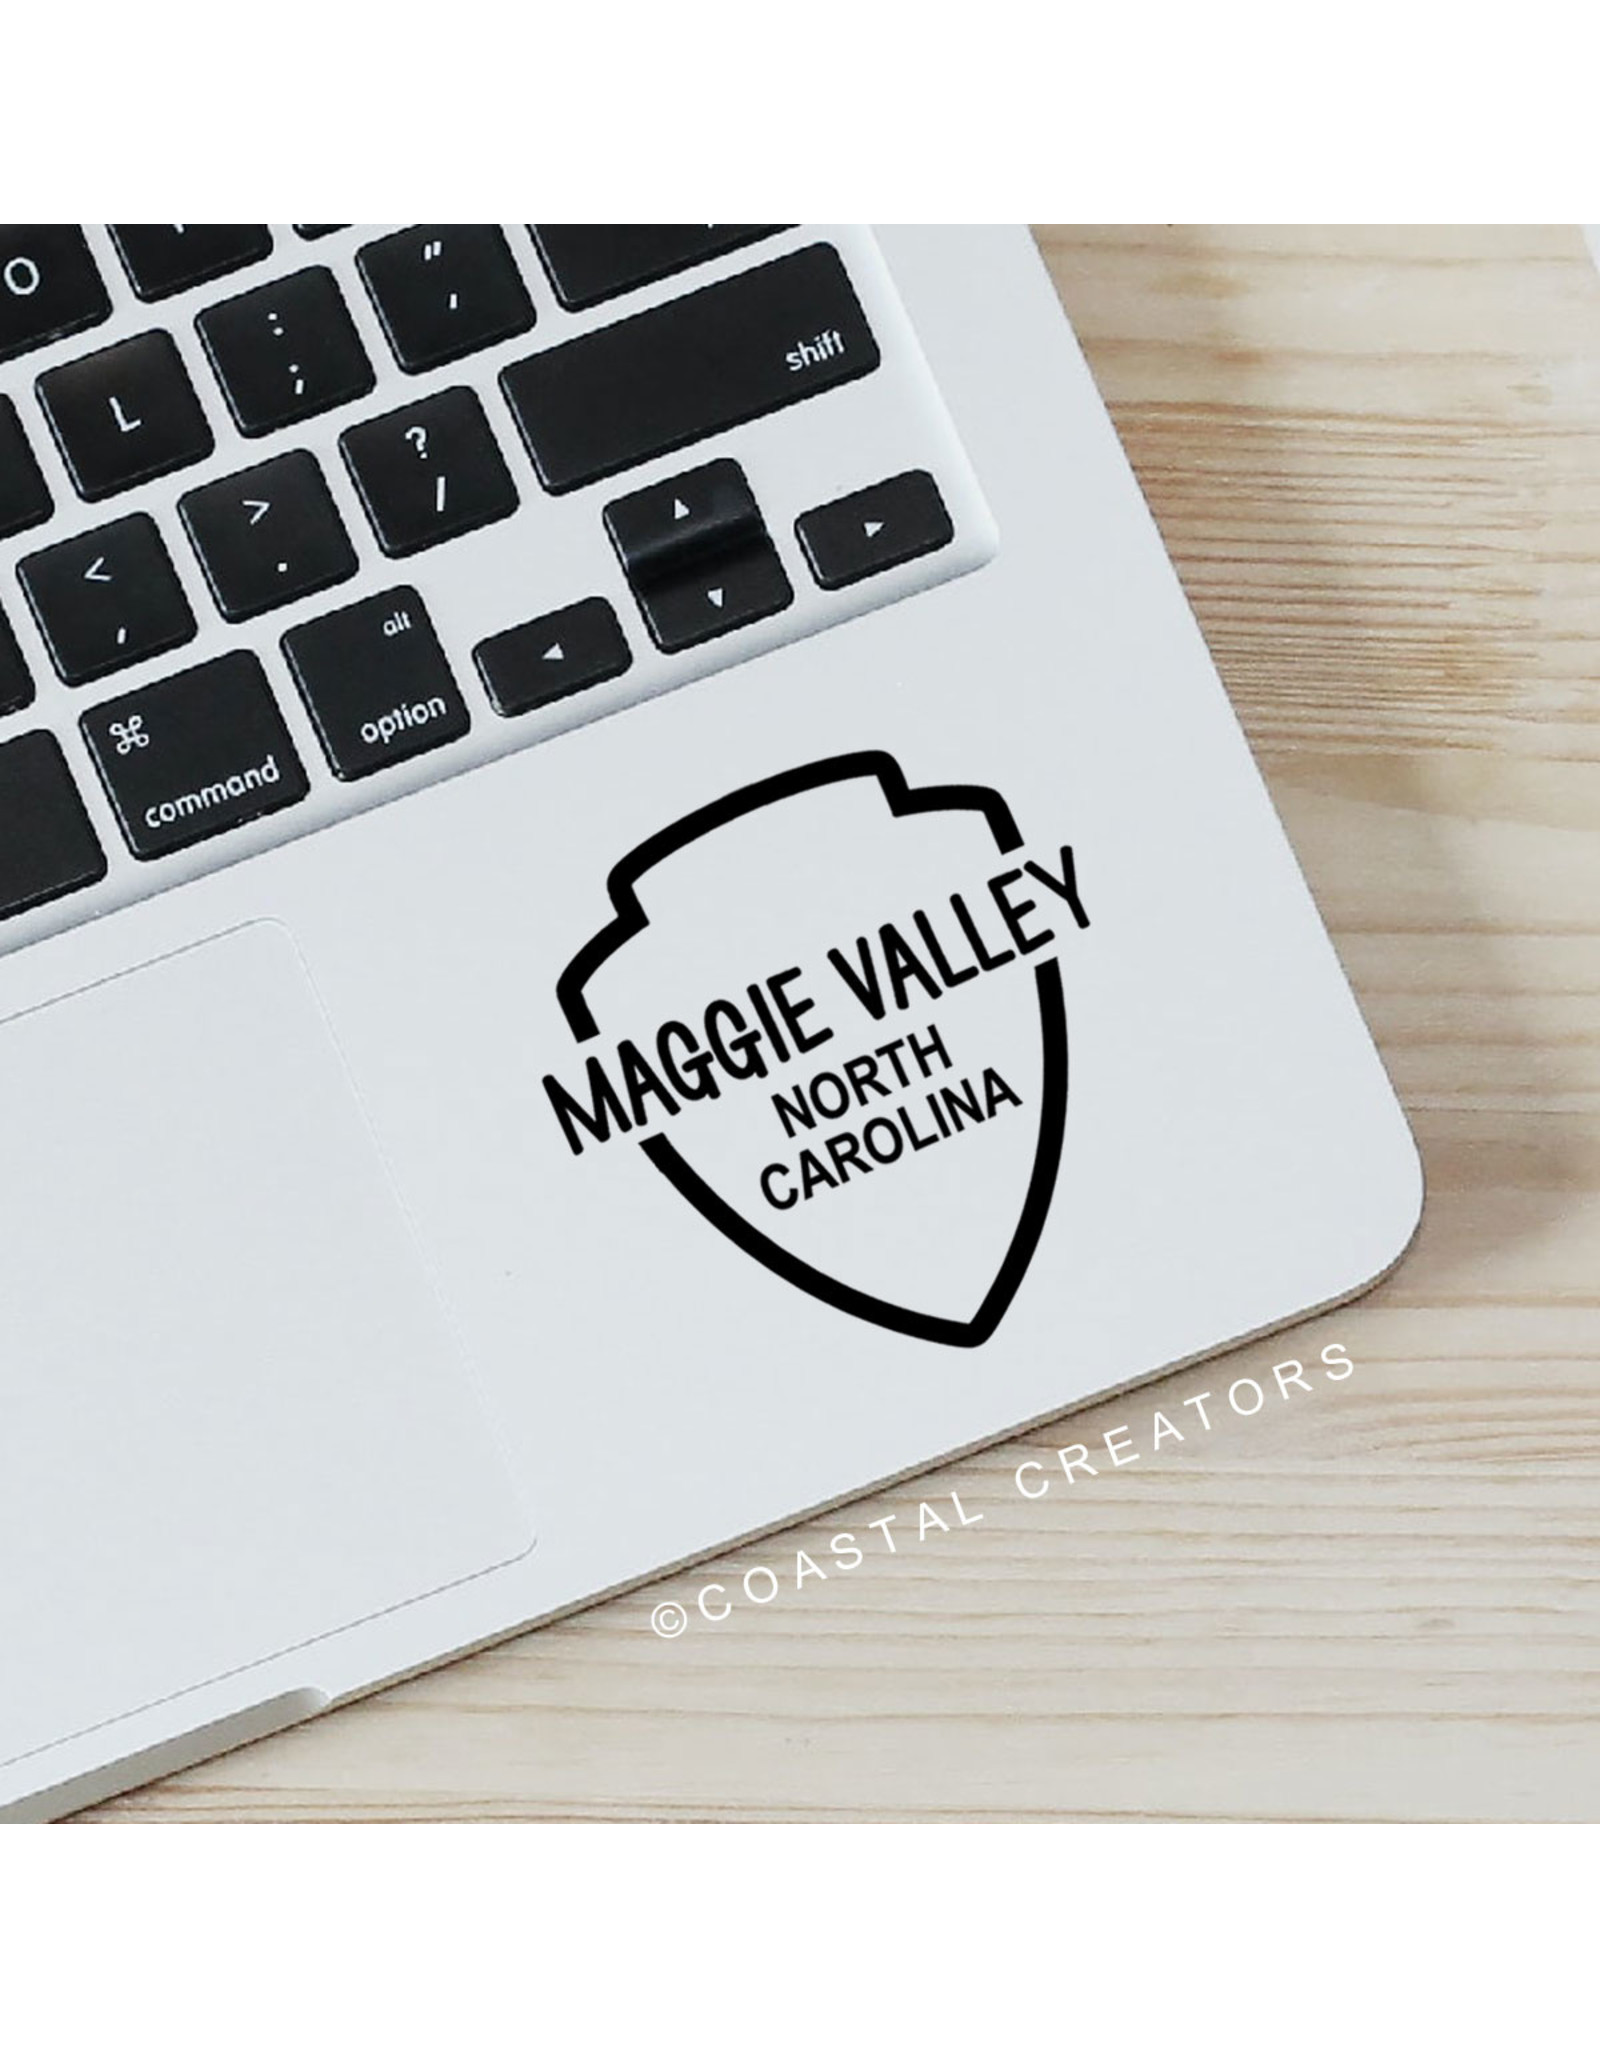 Coastal Creations Maggie Valley Badge Vinyl Sticker Decal